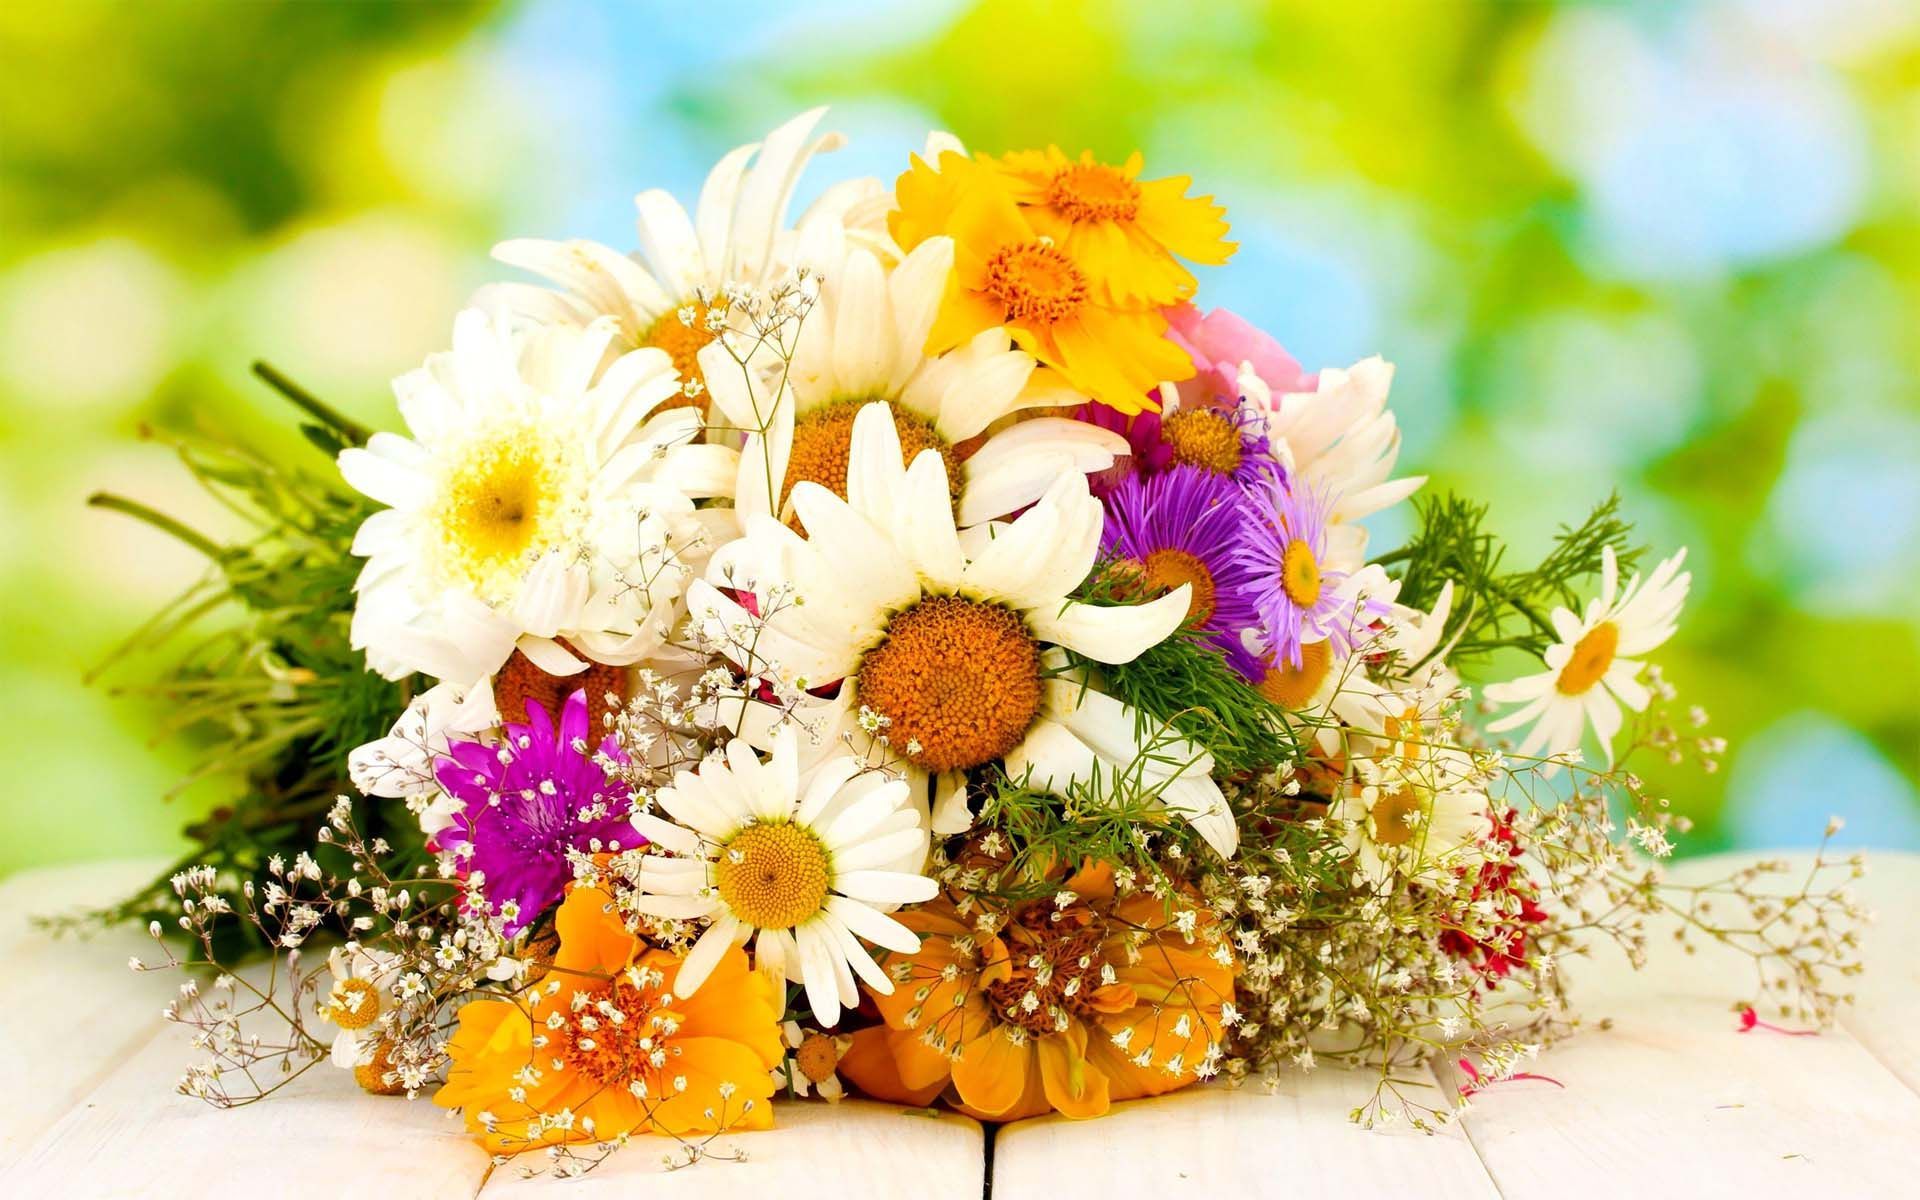 Wild Flower Bouquet. HD Flowers Wallpaper for Mobile and Desktop